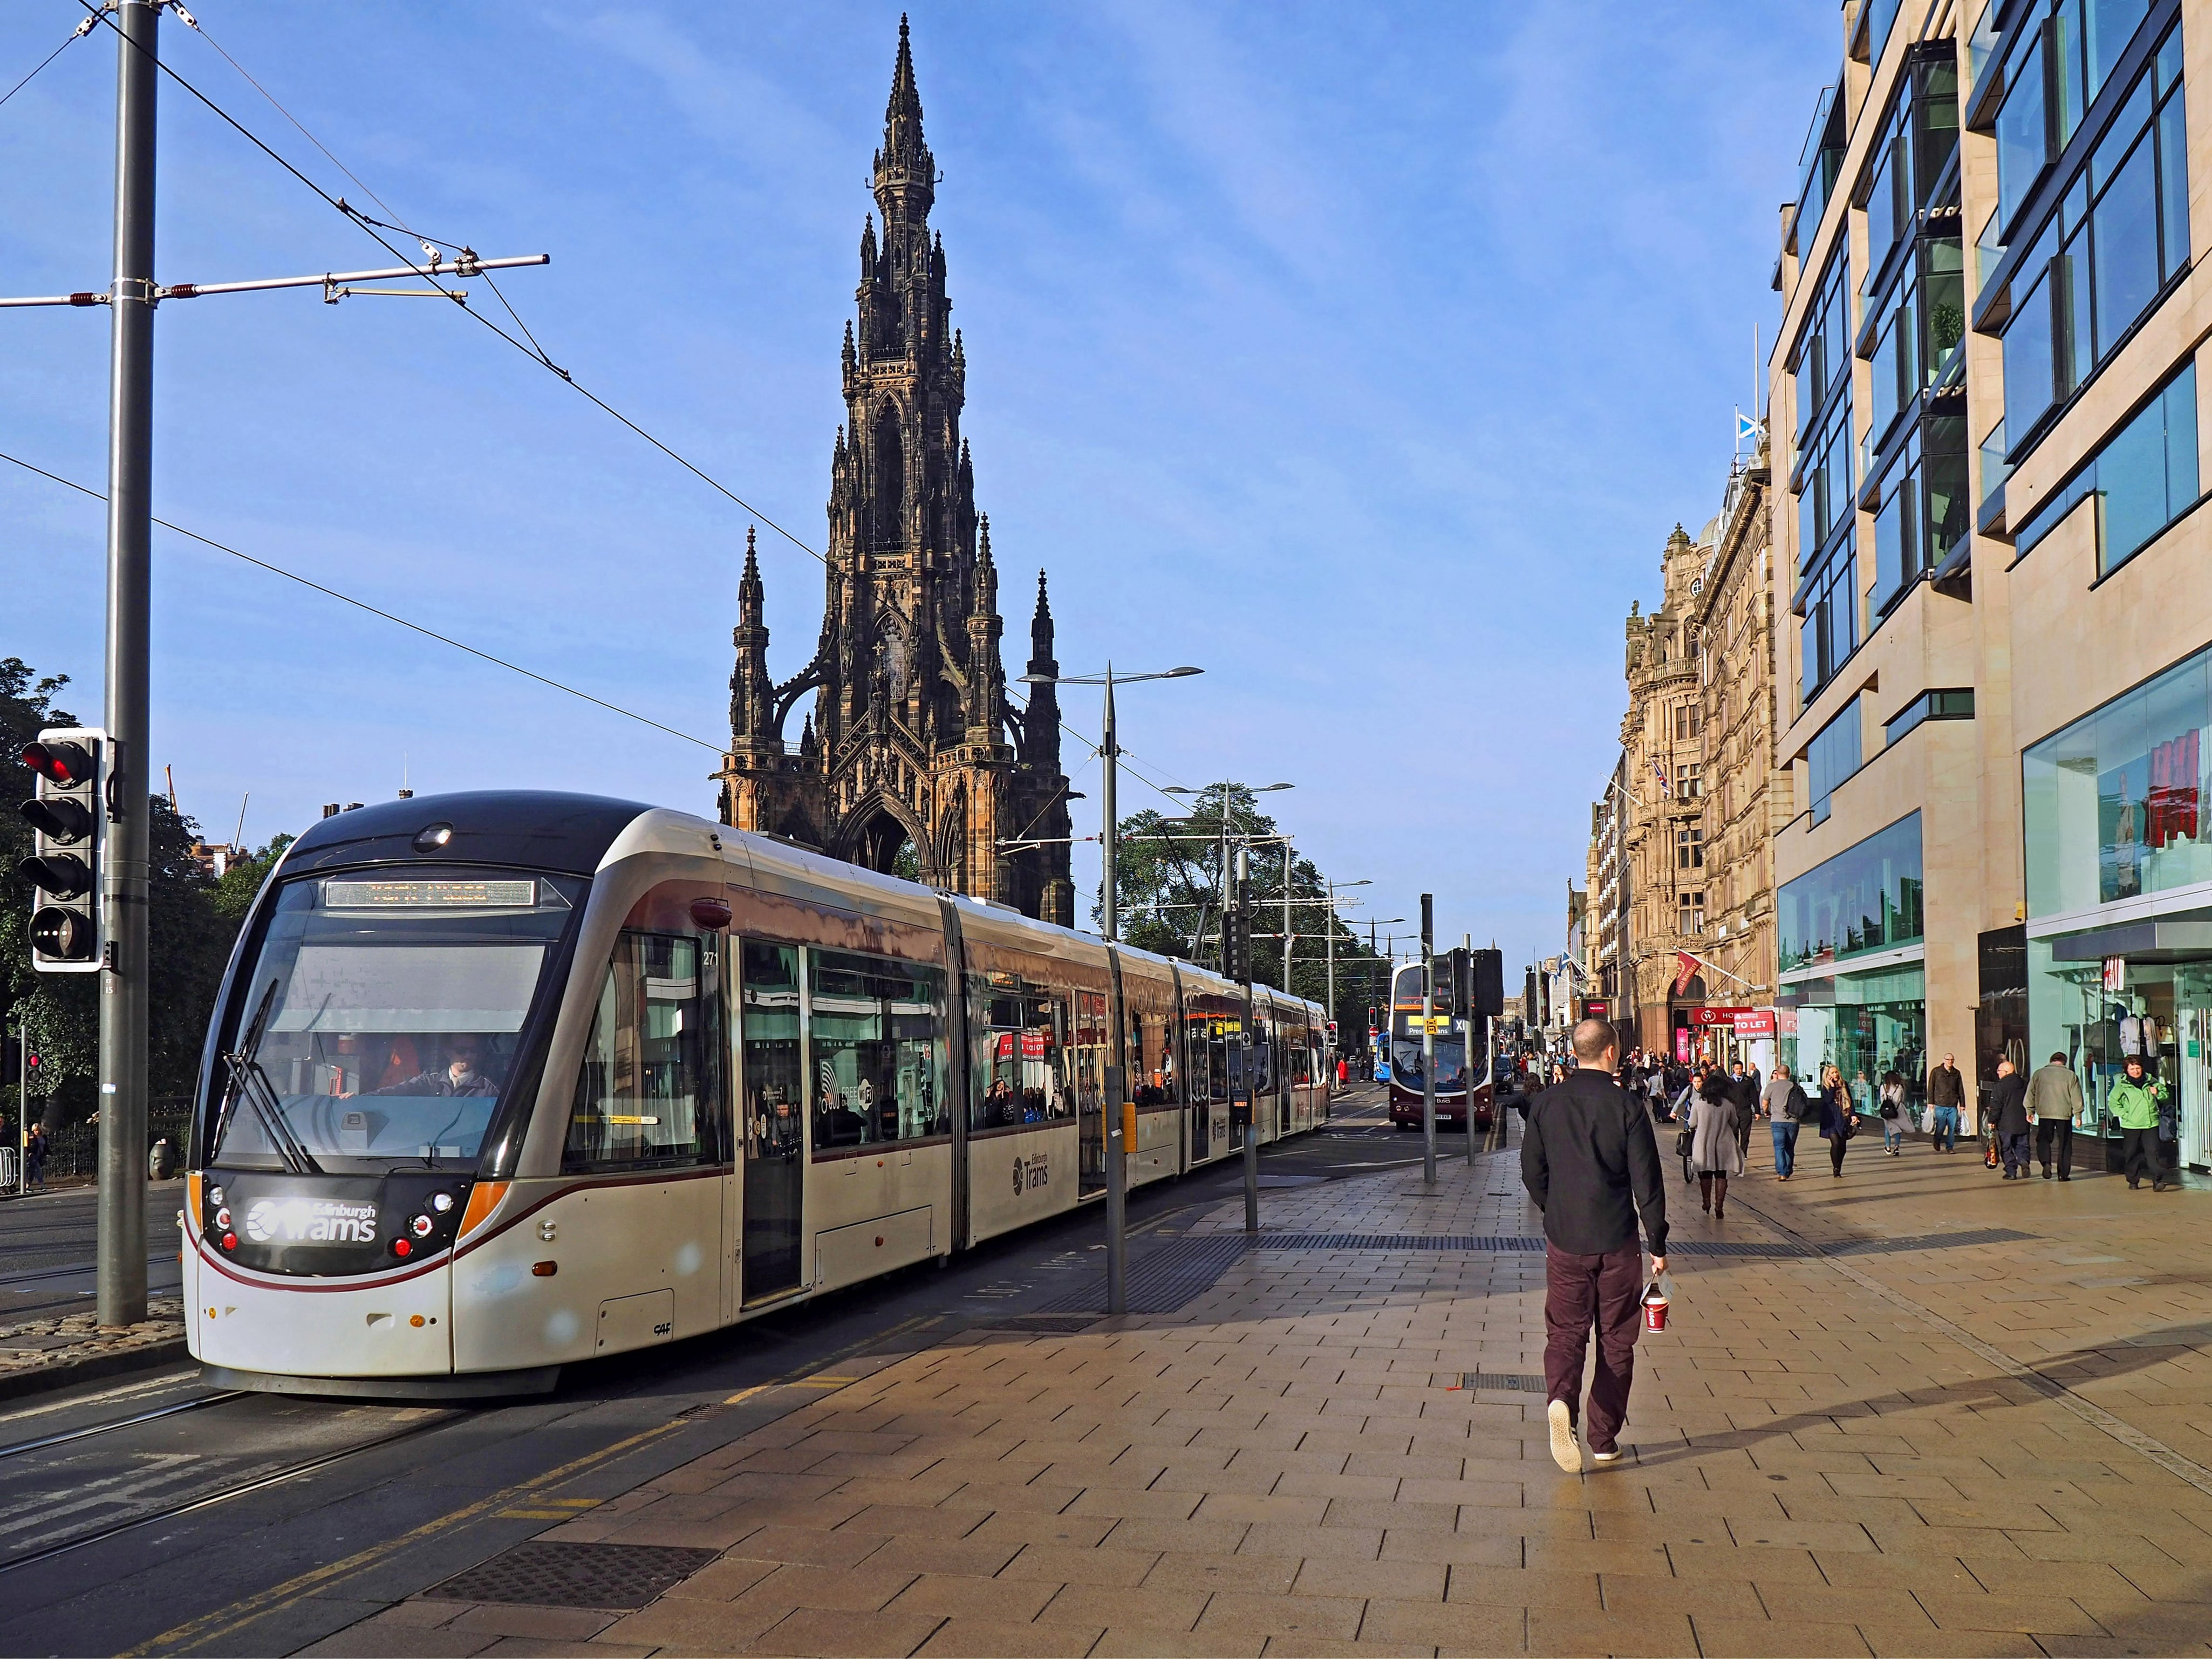 Edinburgh trams on Princes Street, Scott Monument